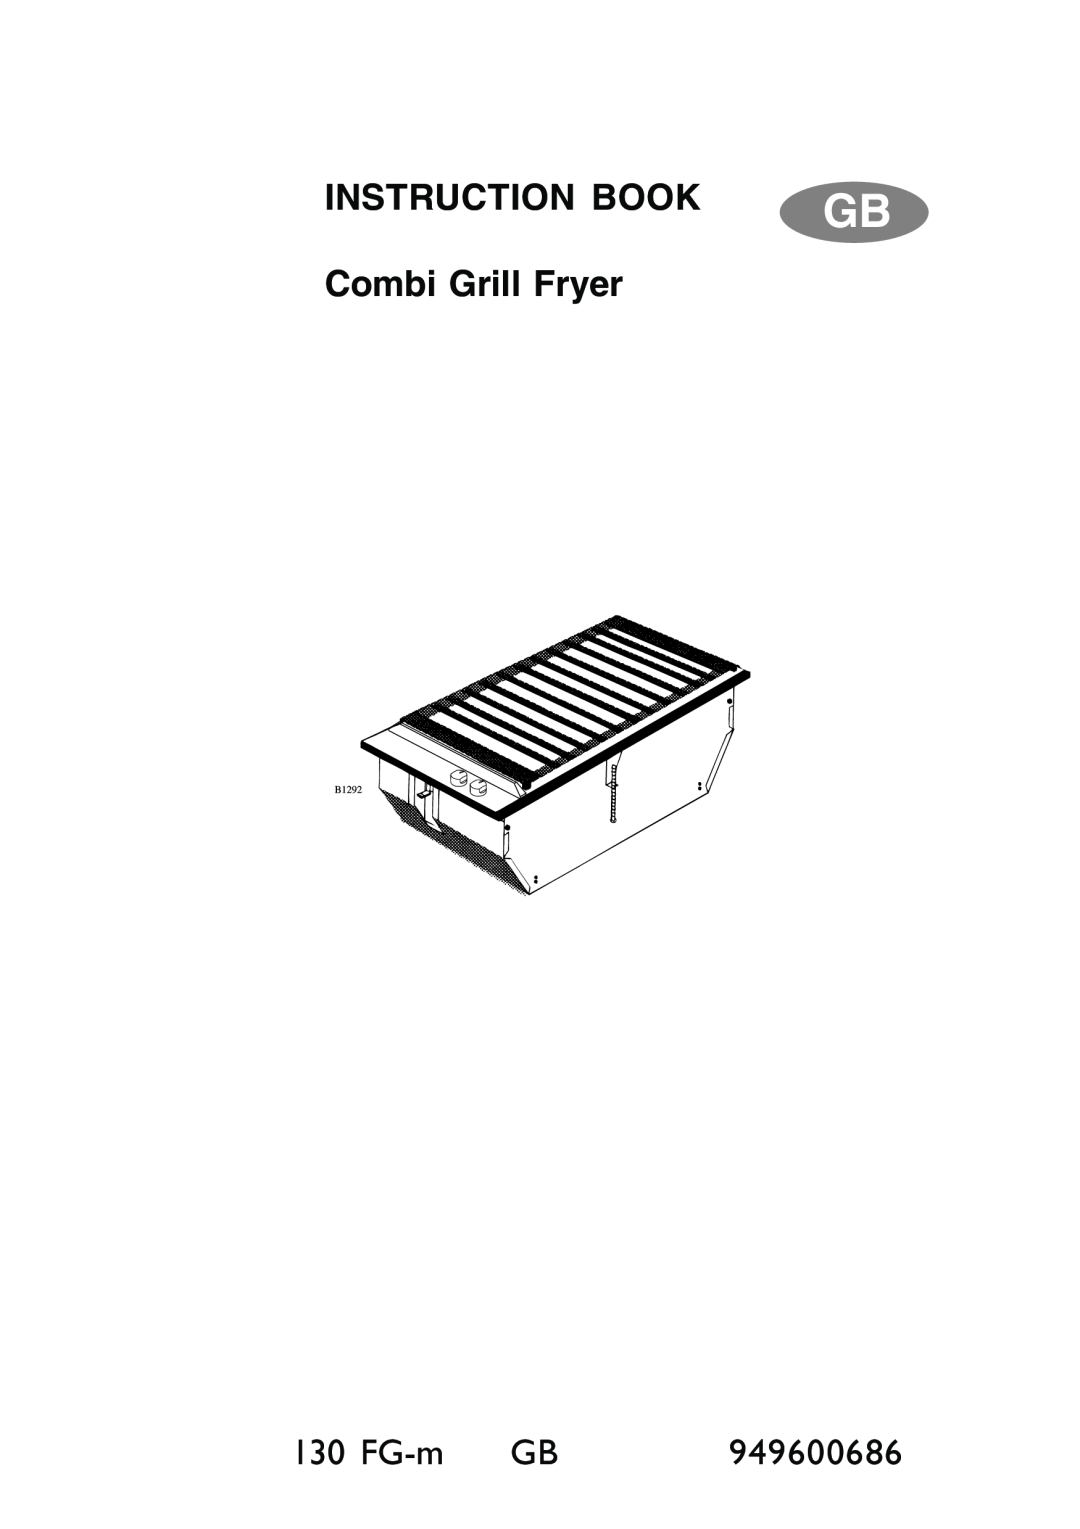 Electrolux 130 FG-m manual INSTRUCTION BOOK Combi Grill Fryer, FG-m GB, 949600686 